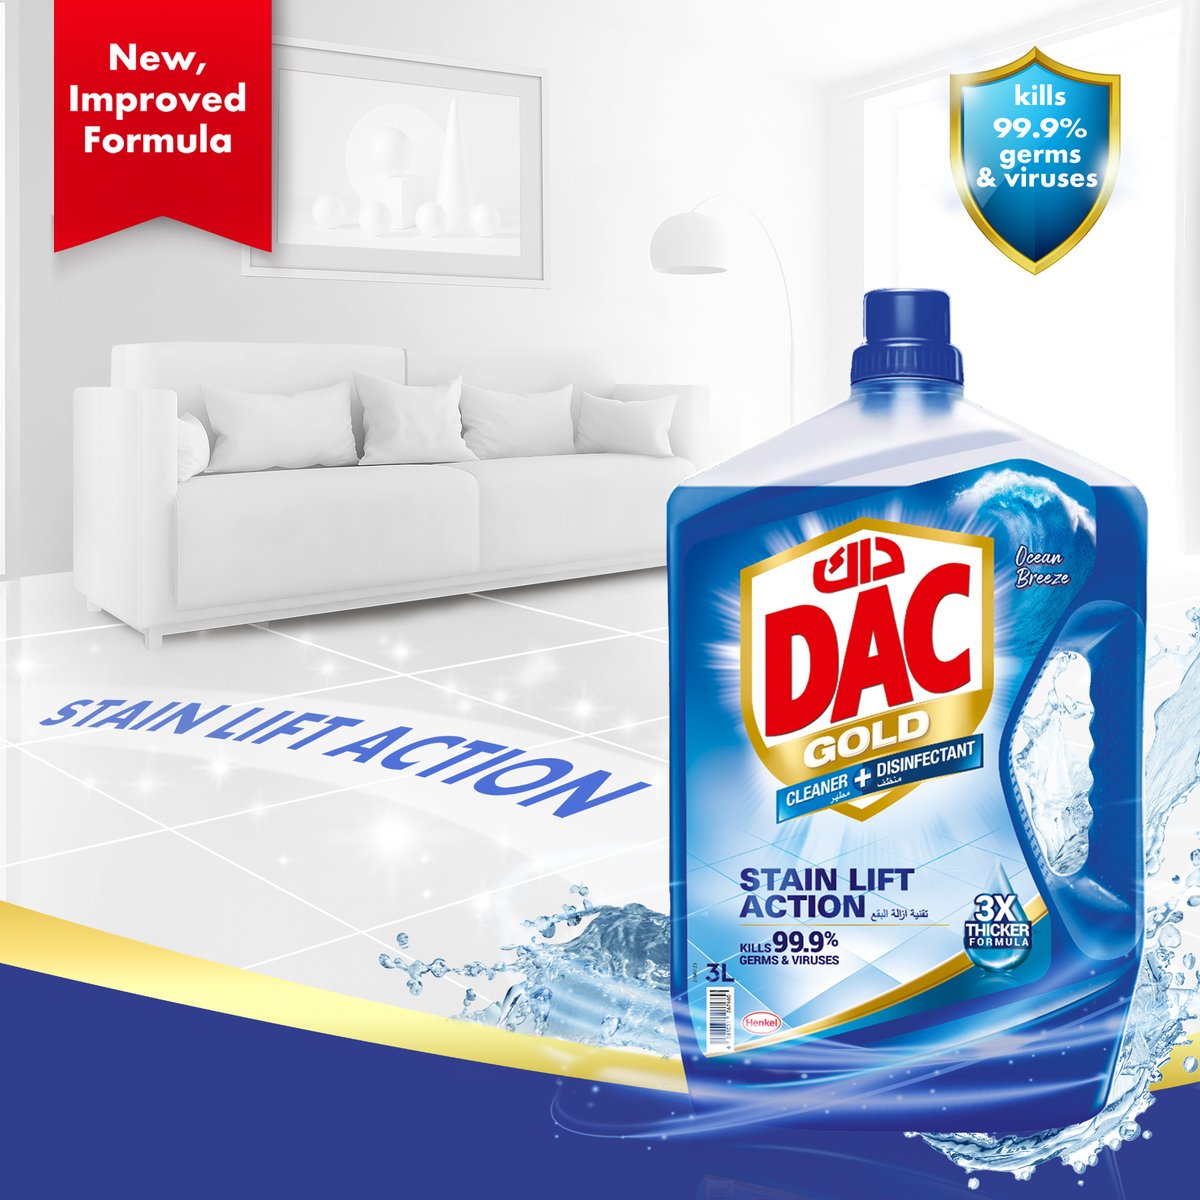 Dac Gold Ocean Breeze Multi Purpose Disinfectant 3 Litres + 1 Litre